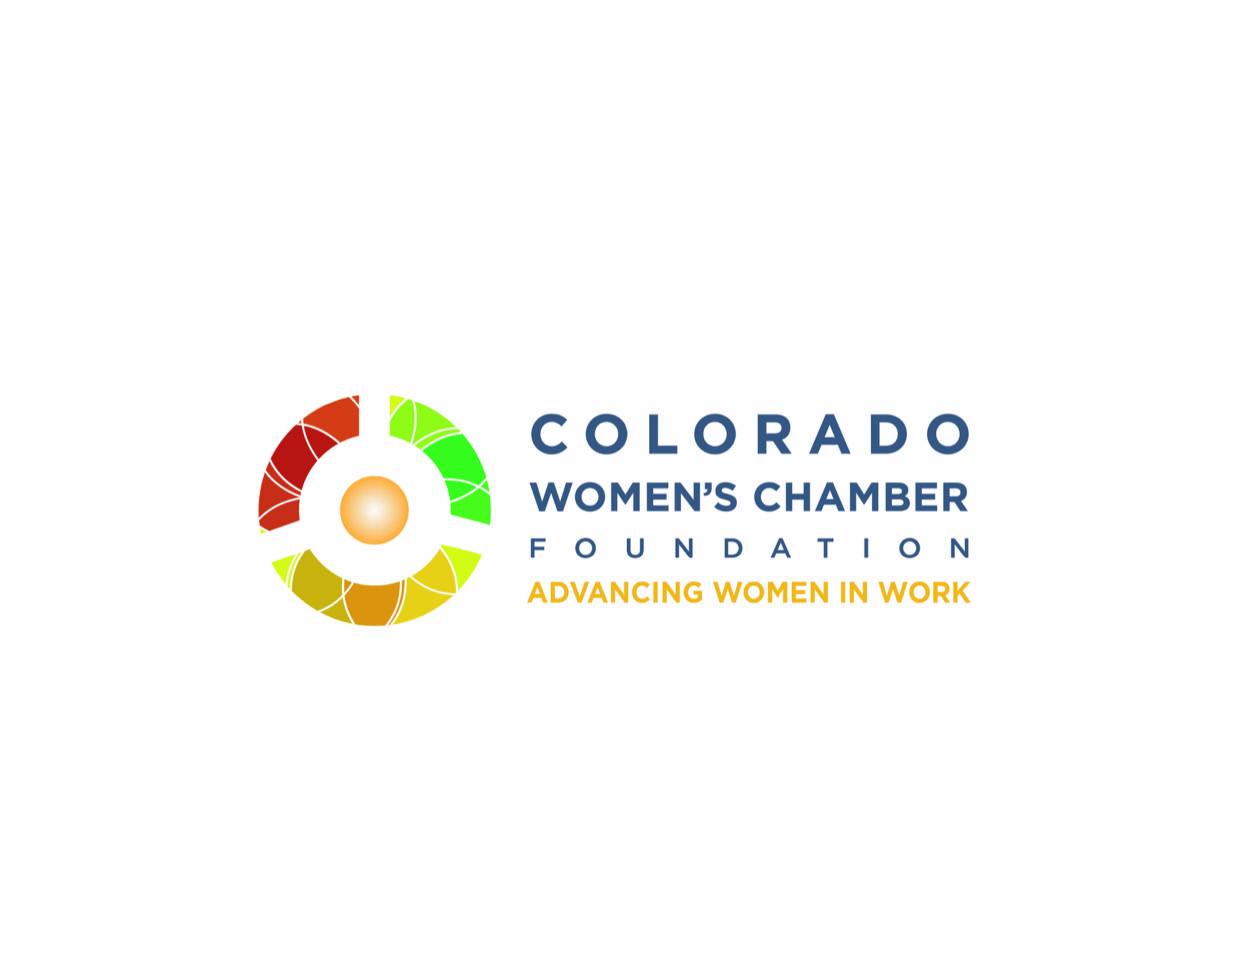 The Colorado Women's Chamber Foundation logo